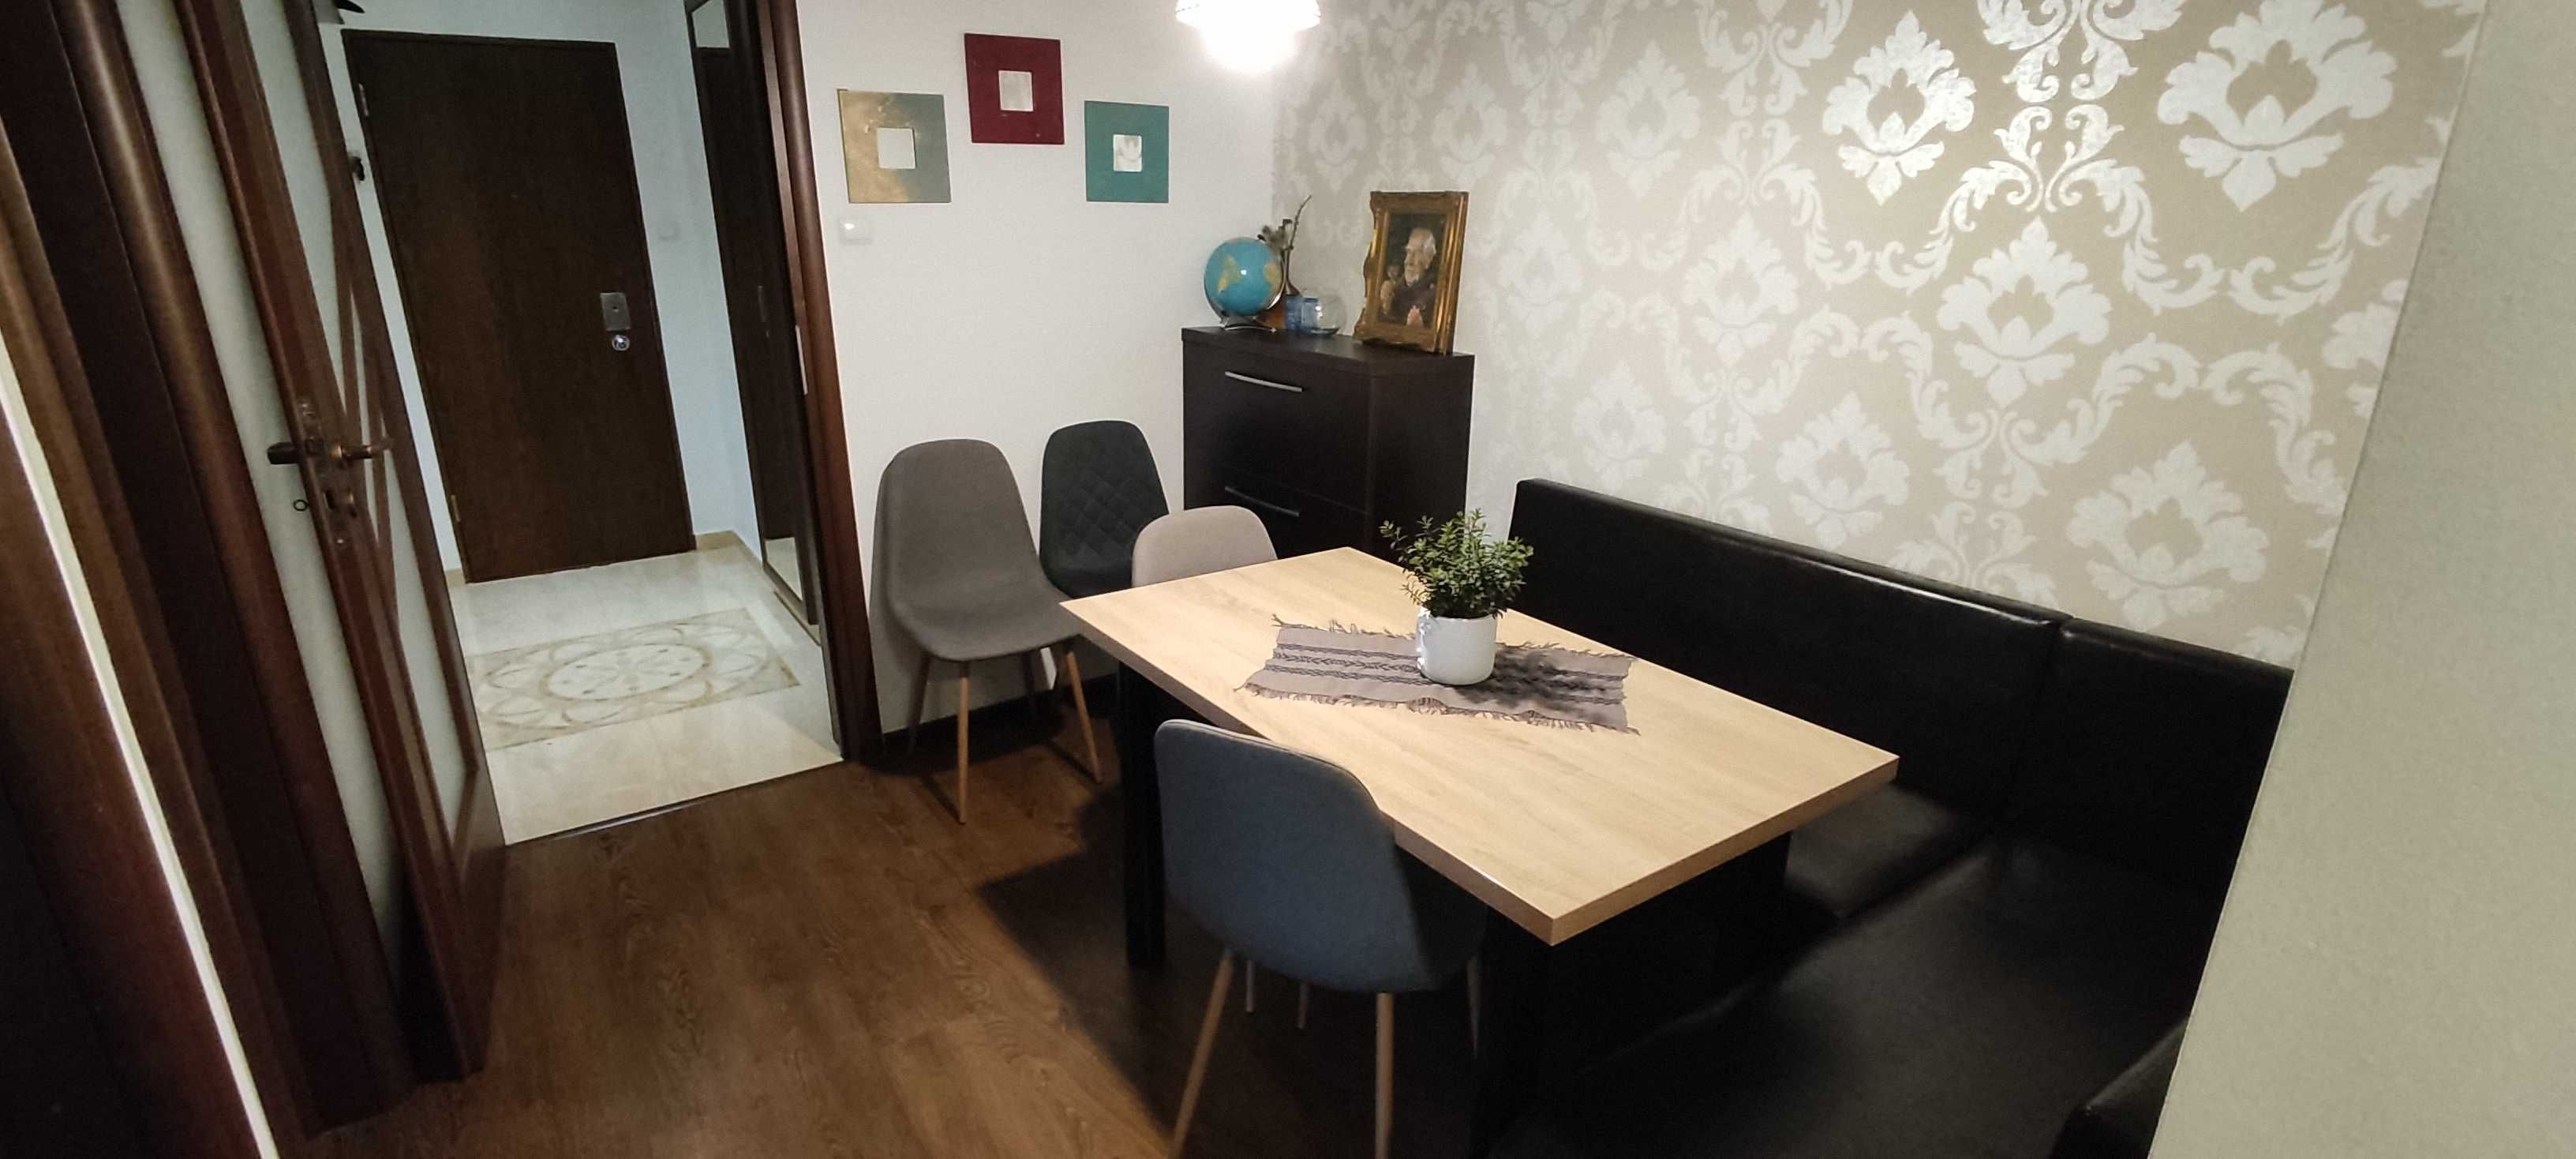 Vânzare apartament 3 camere, Mănăstur, strada Vidraru